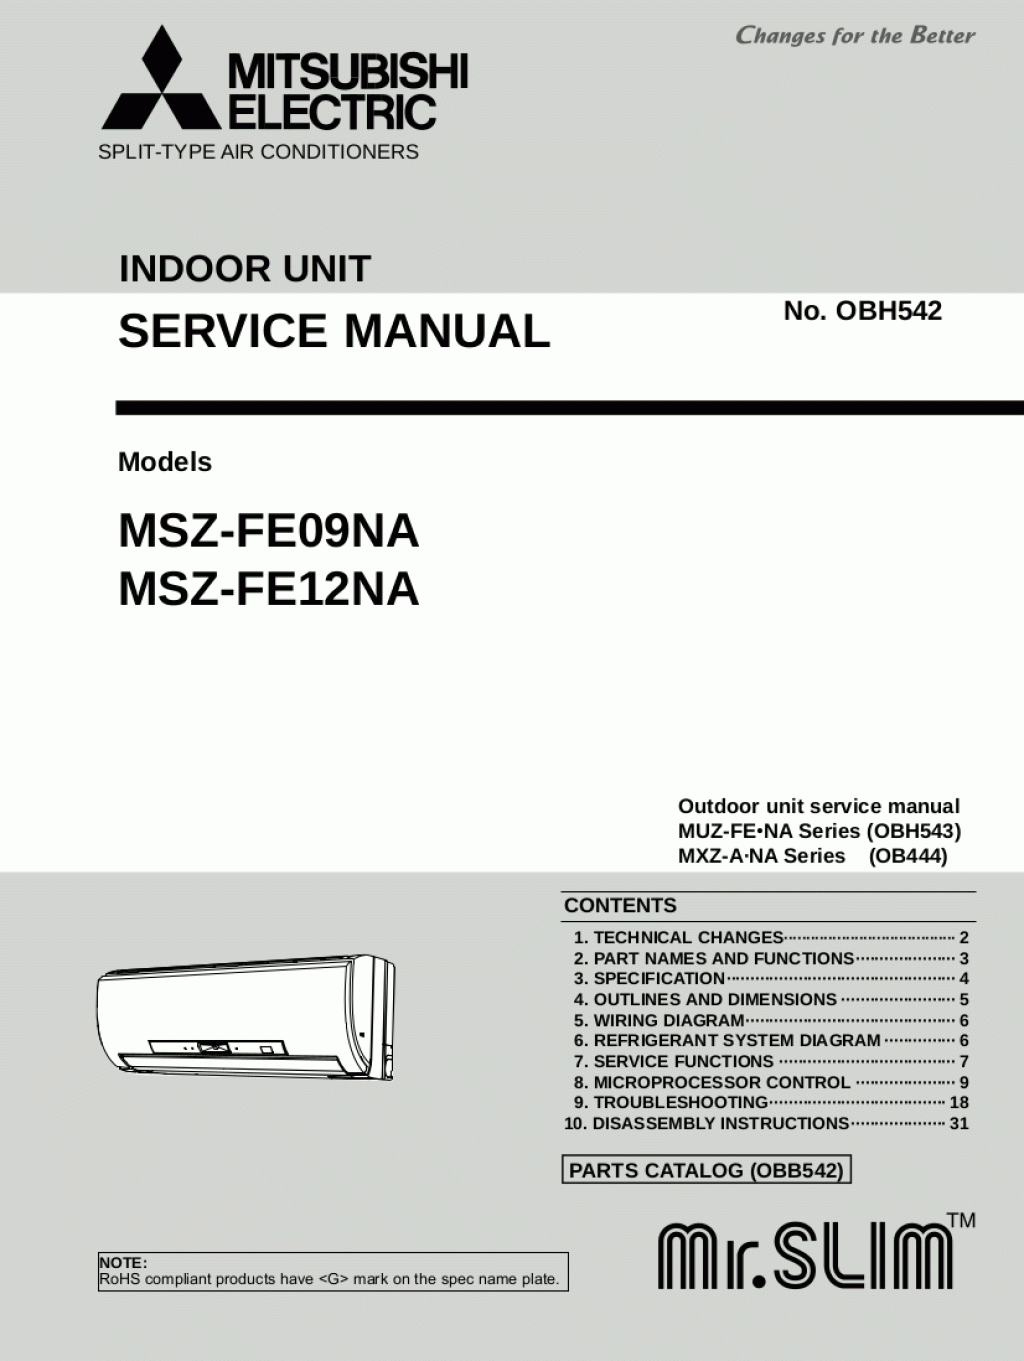 Picture of: Mitsubishi Air Conditioner Service Manuals